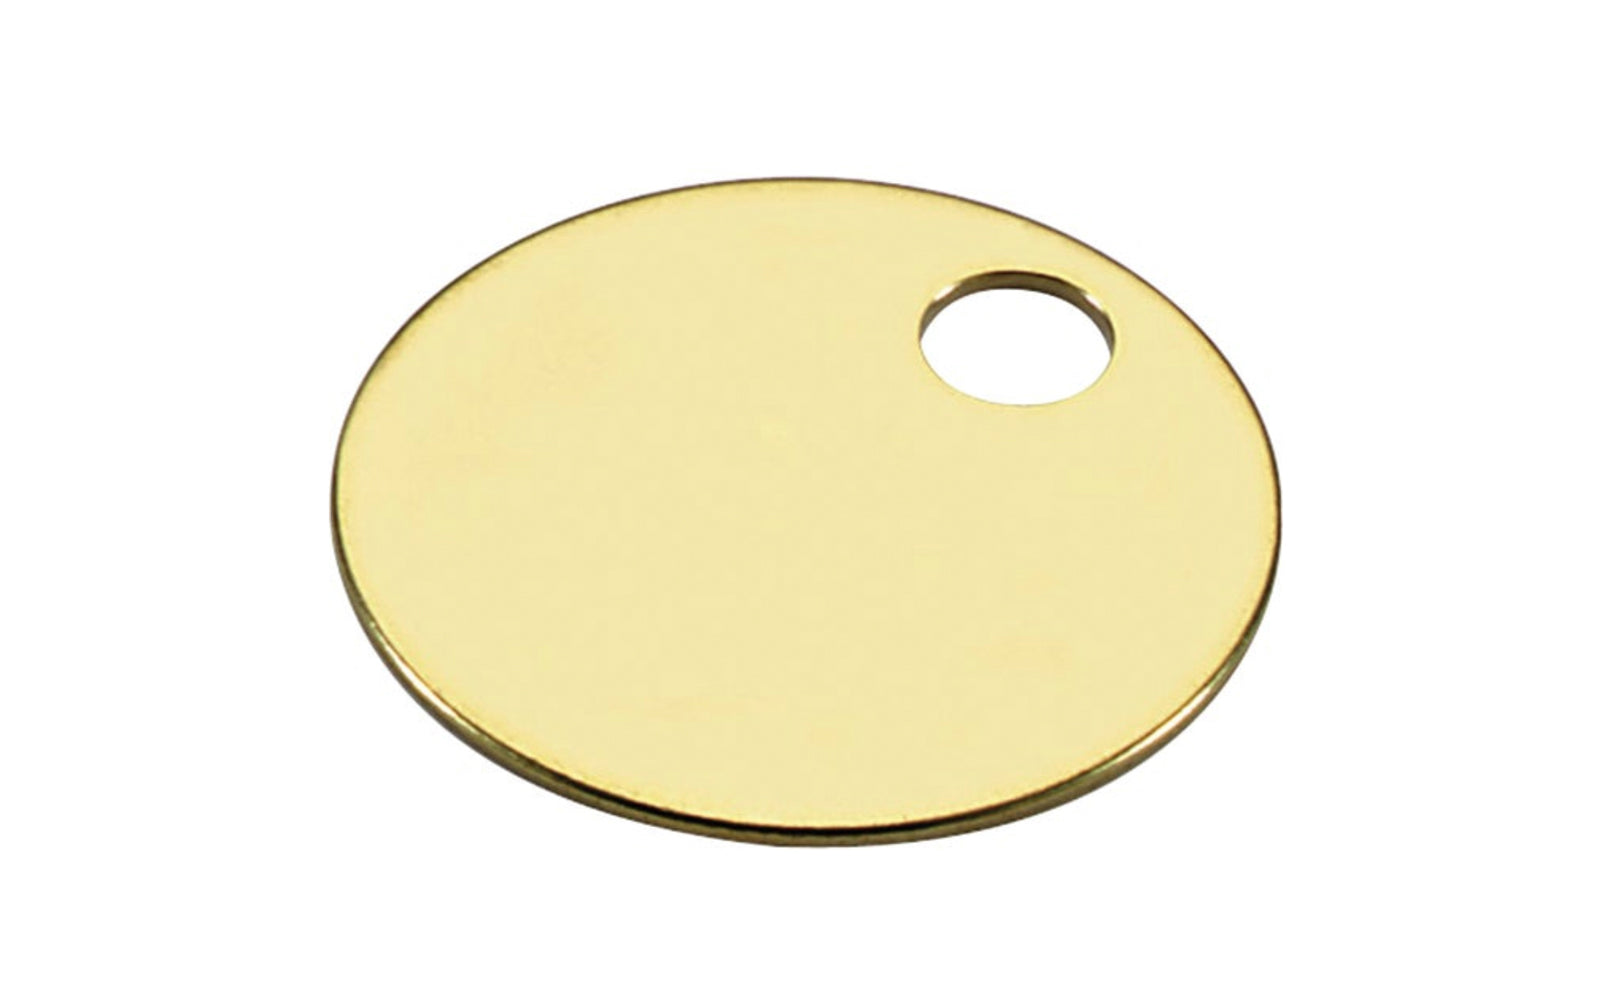 1-1/4 Diameter Solid Brass Tag